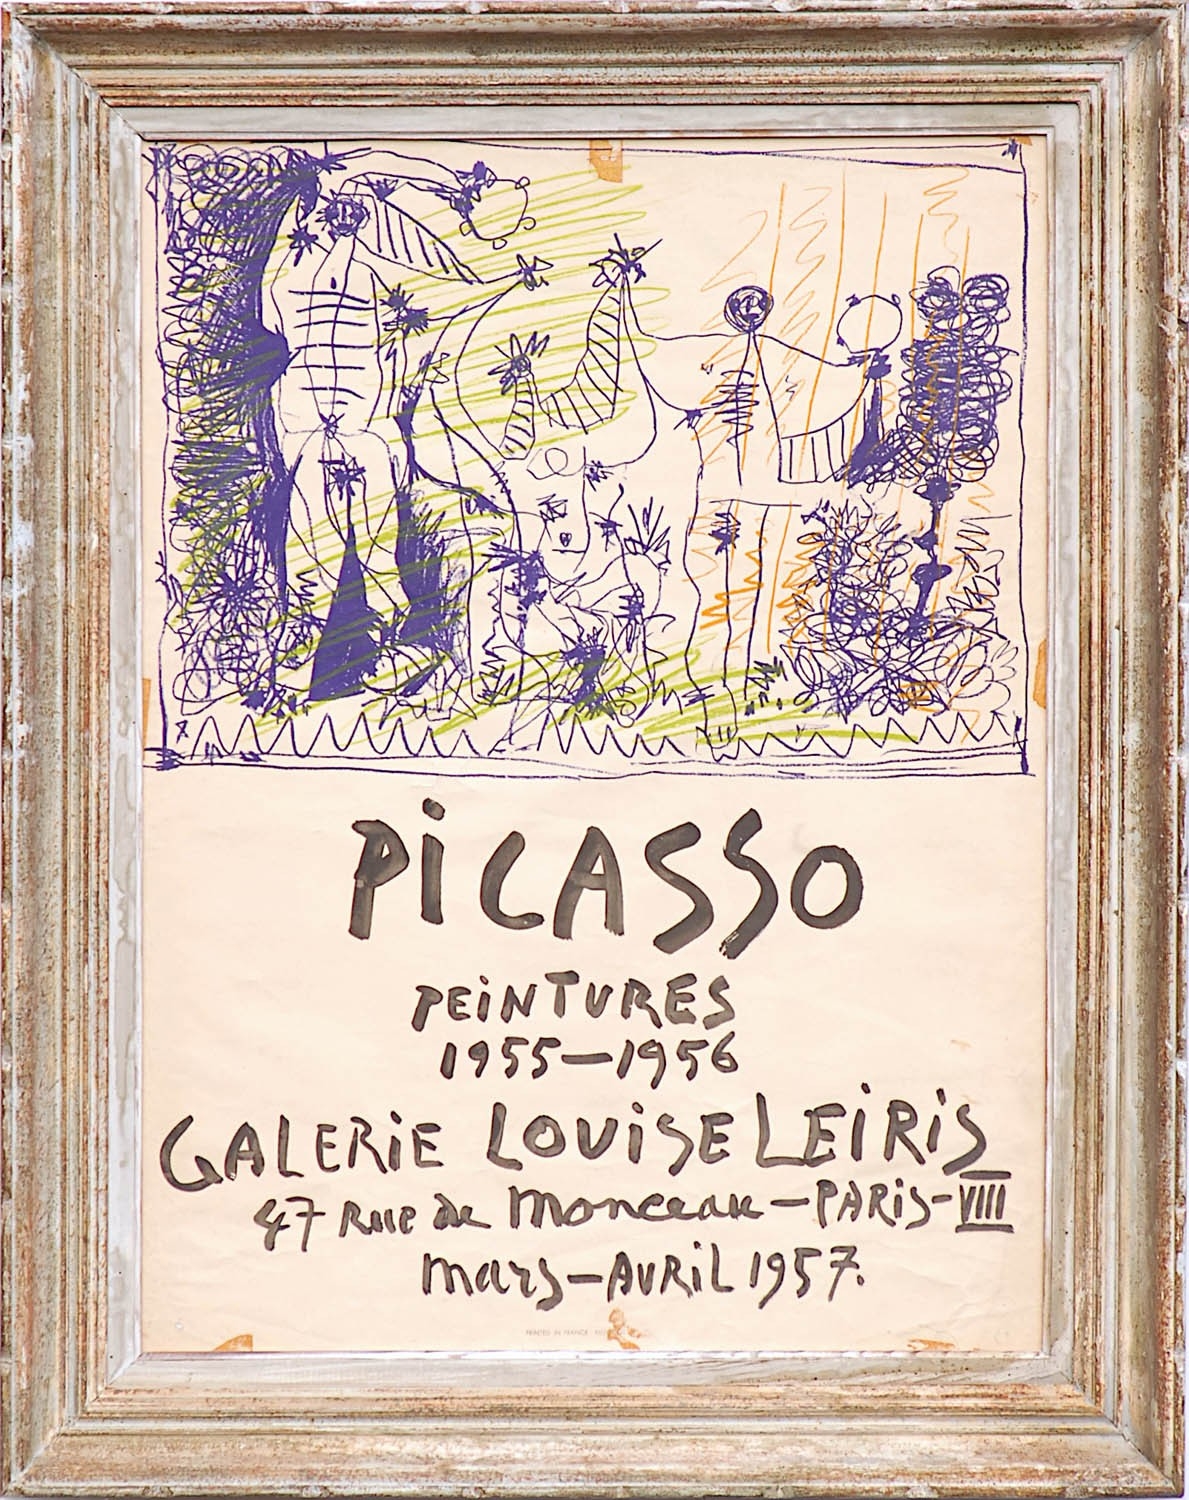 Sold at Auction: GALERIE LOUIS LEIRIS LTD ED PRINT AFTER PABLO PICASSO